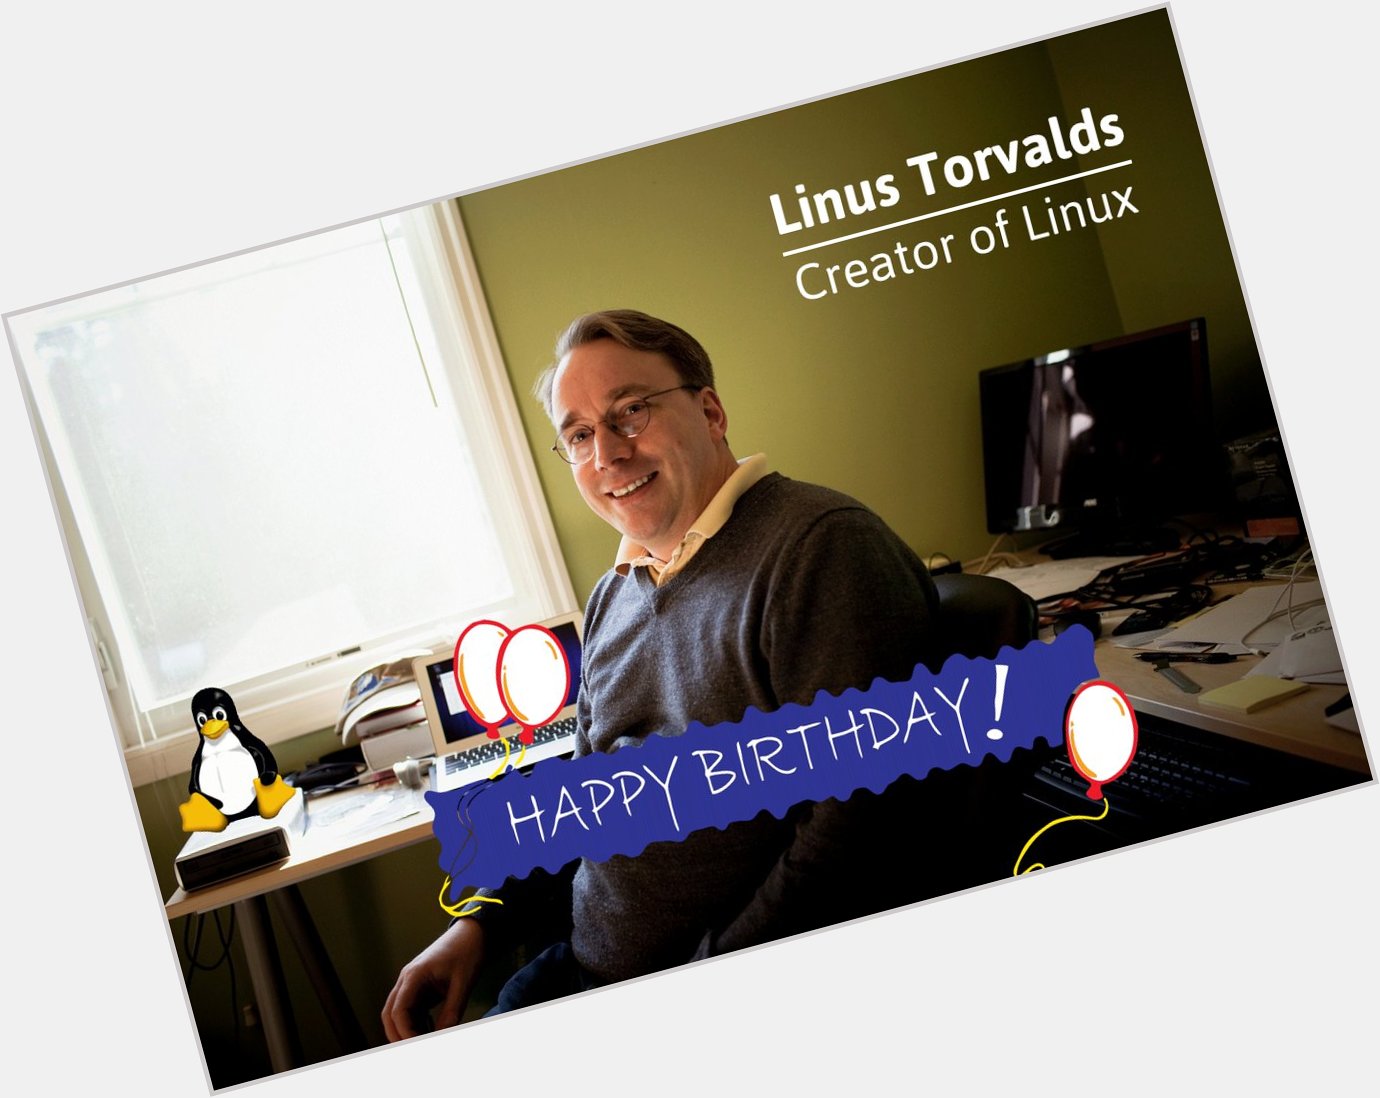 Happy birthday Linus Torvalds <3 